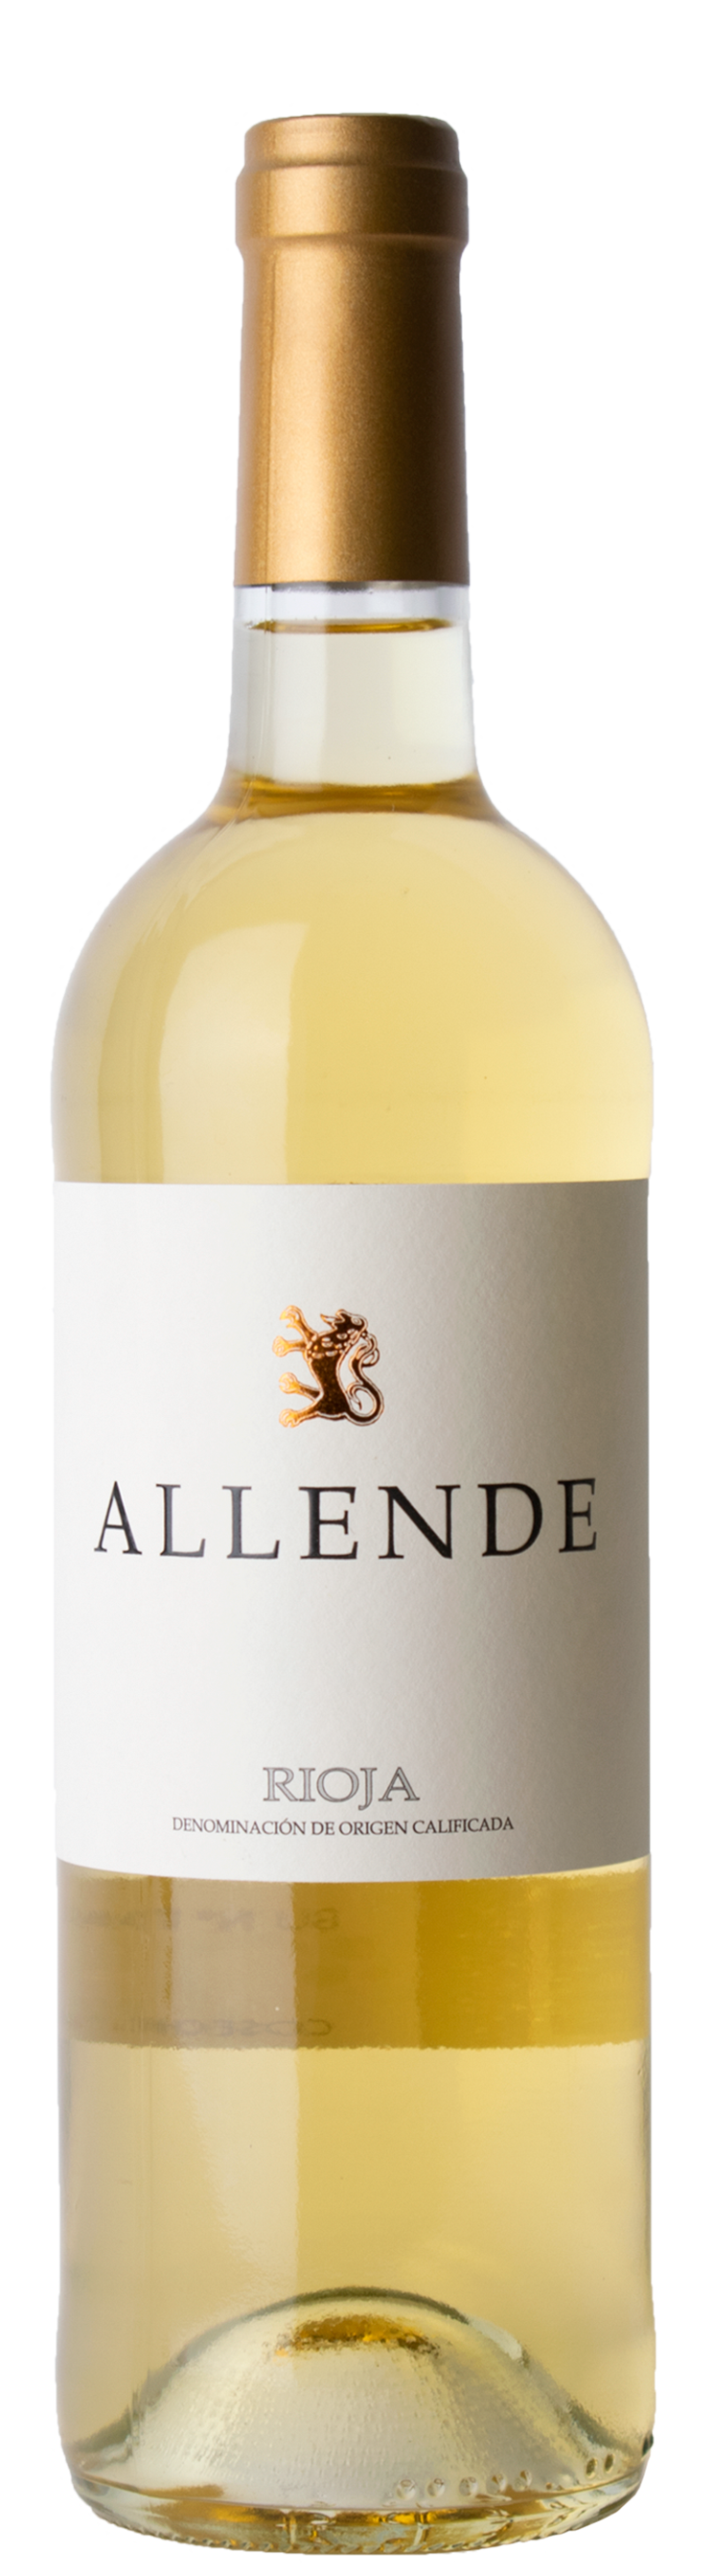 Rioja 2019 Allende Blanco